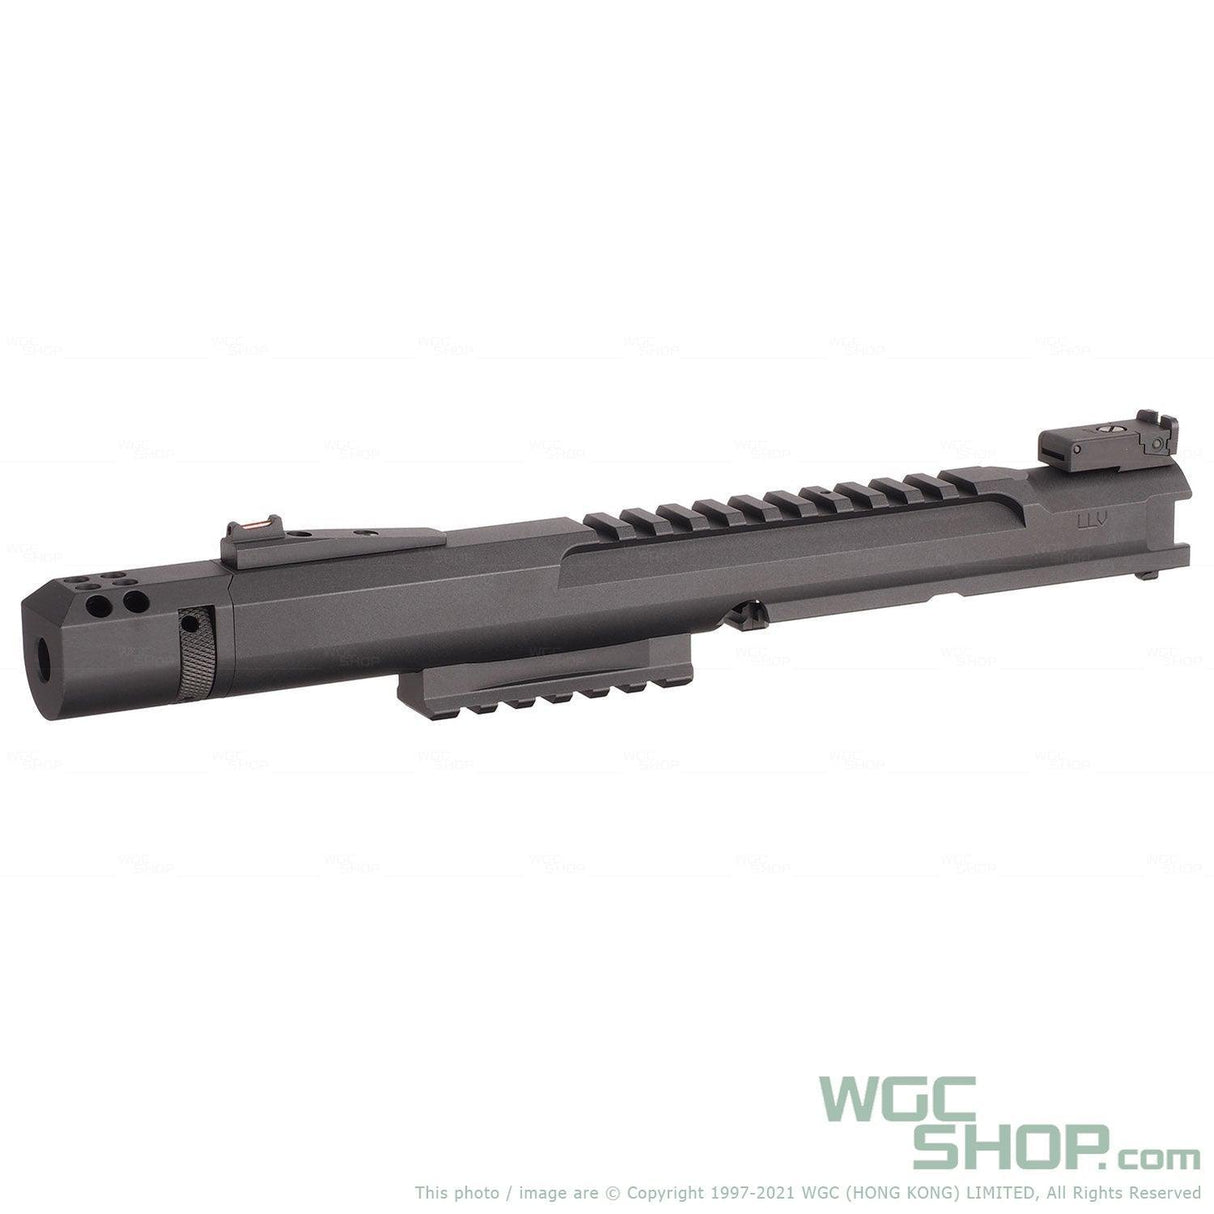 TTI AIRSOFT AAP01 Scorpion Upper Receiver Kit - 6 Inch - WGC Shop